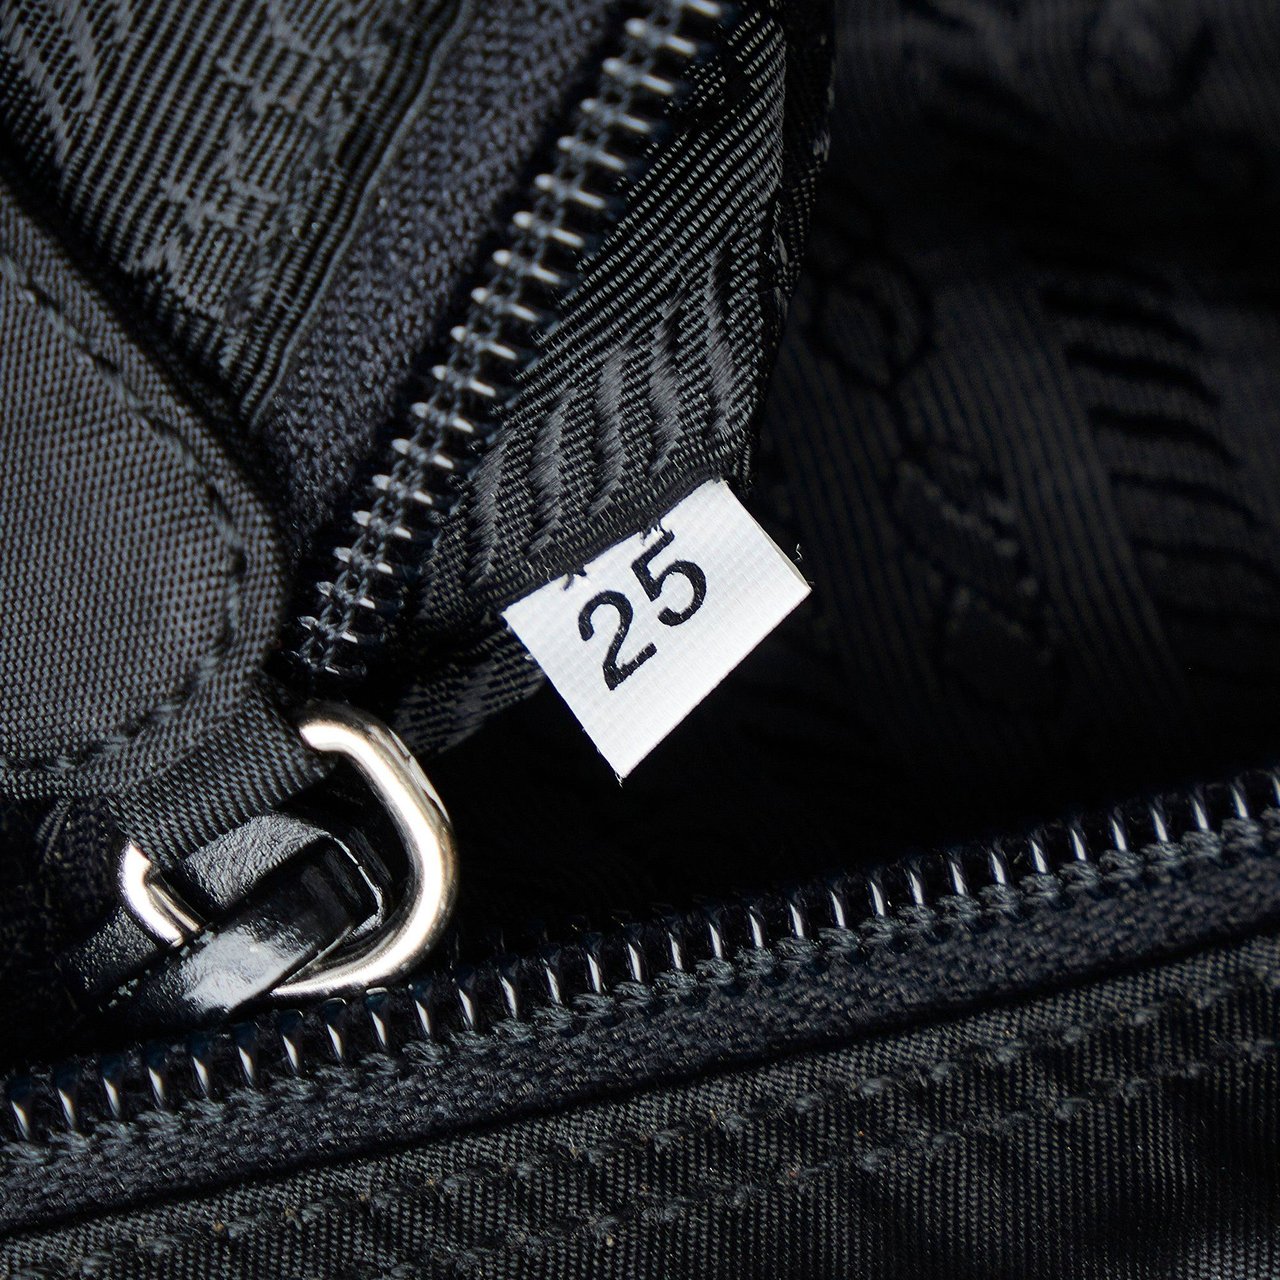 Prada Tessuto Shoulder Bag Zwart